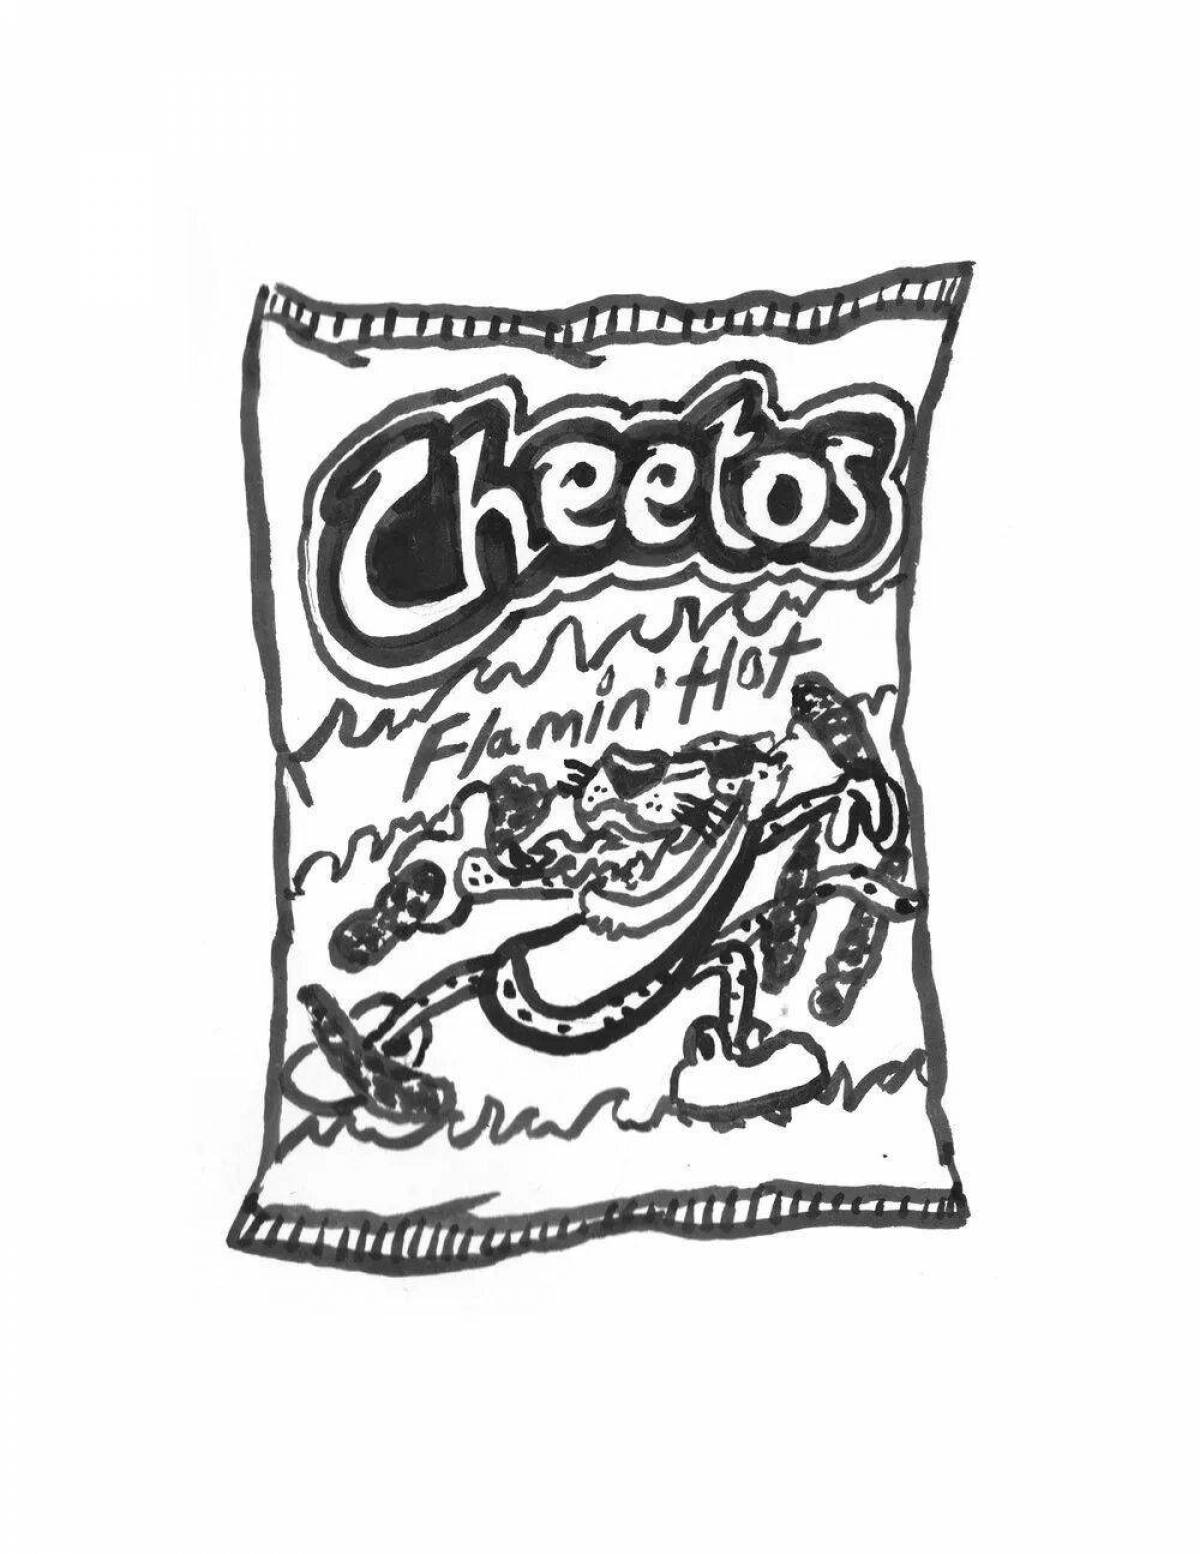 Chips for kids #2